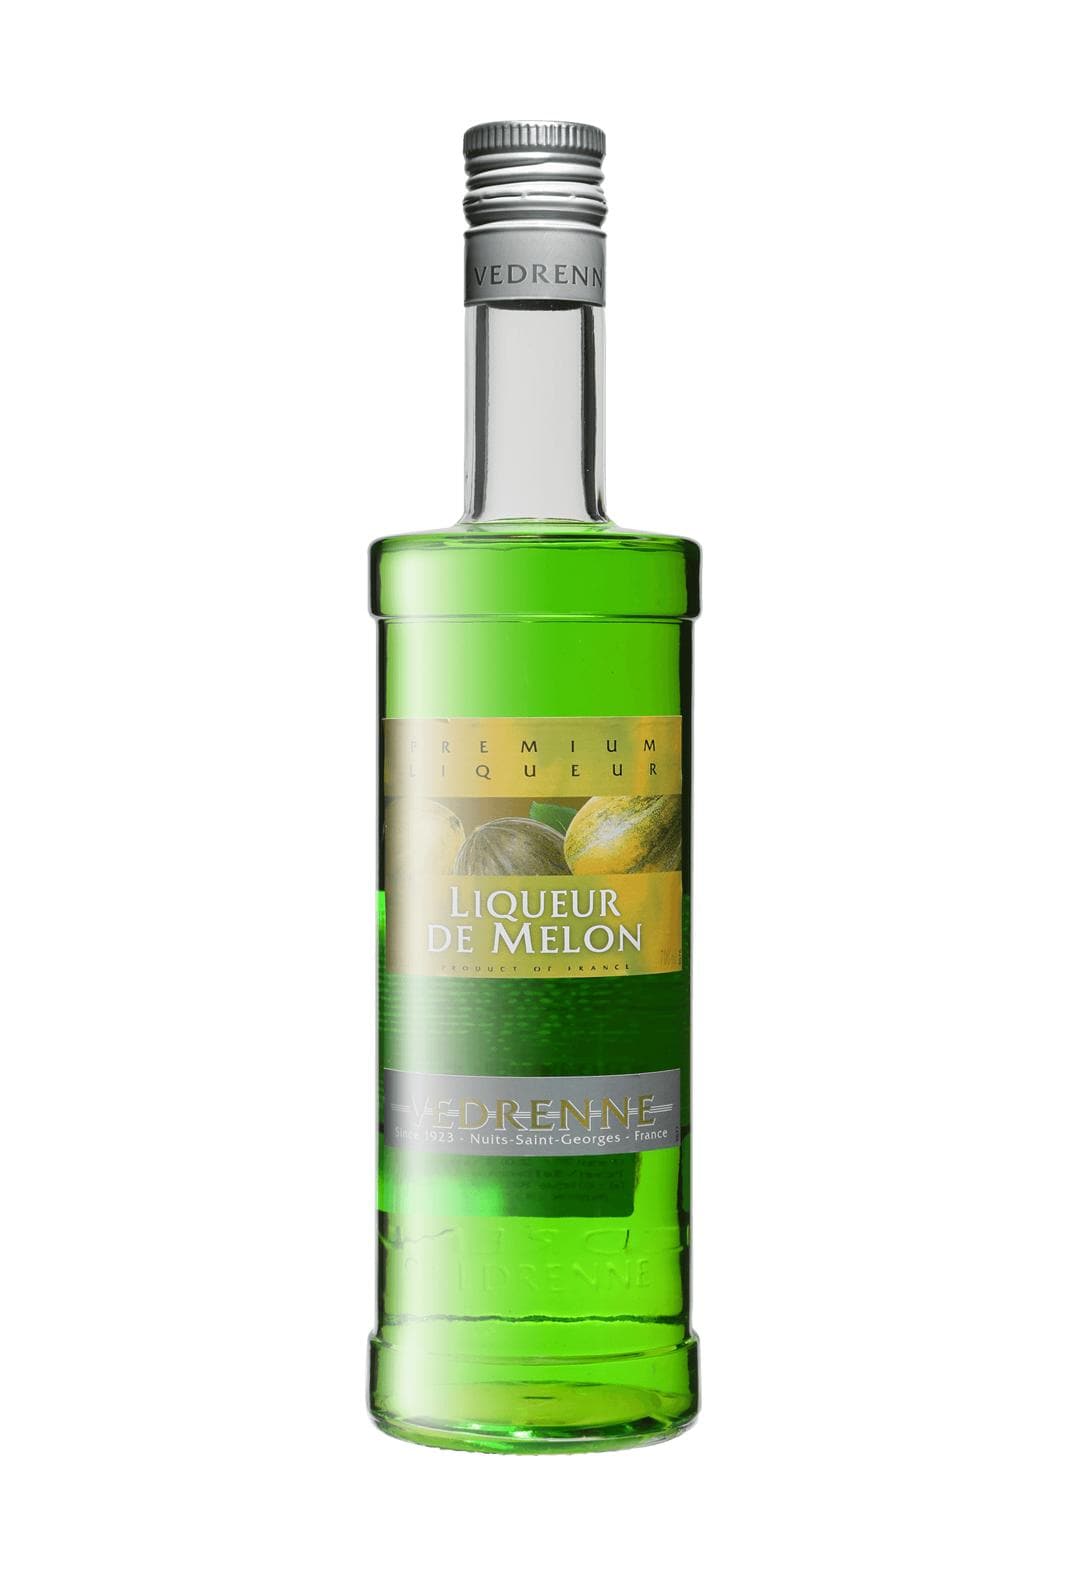 Vedrenne Liqueur de Melon Vert (Honeydew) 20% 700ml | Liqueurs | Shop online at Spirits of France